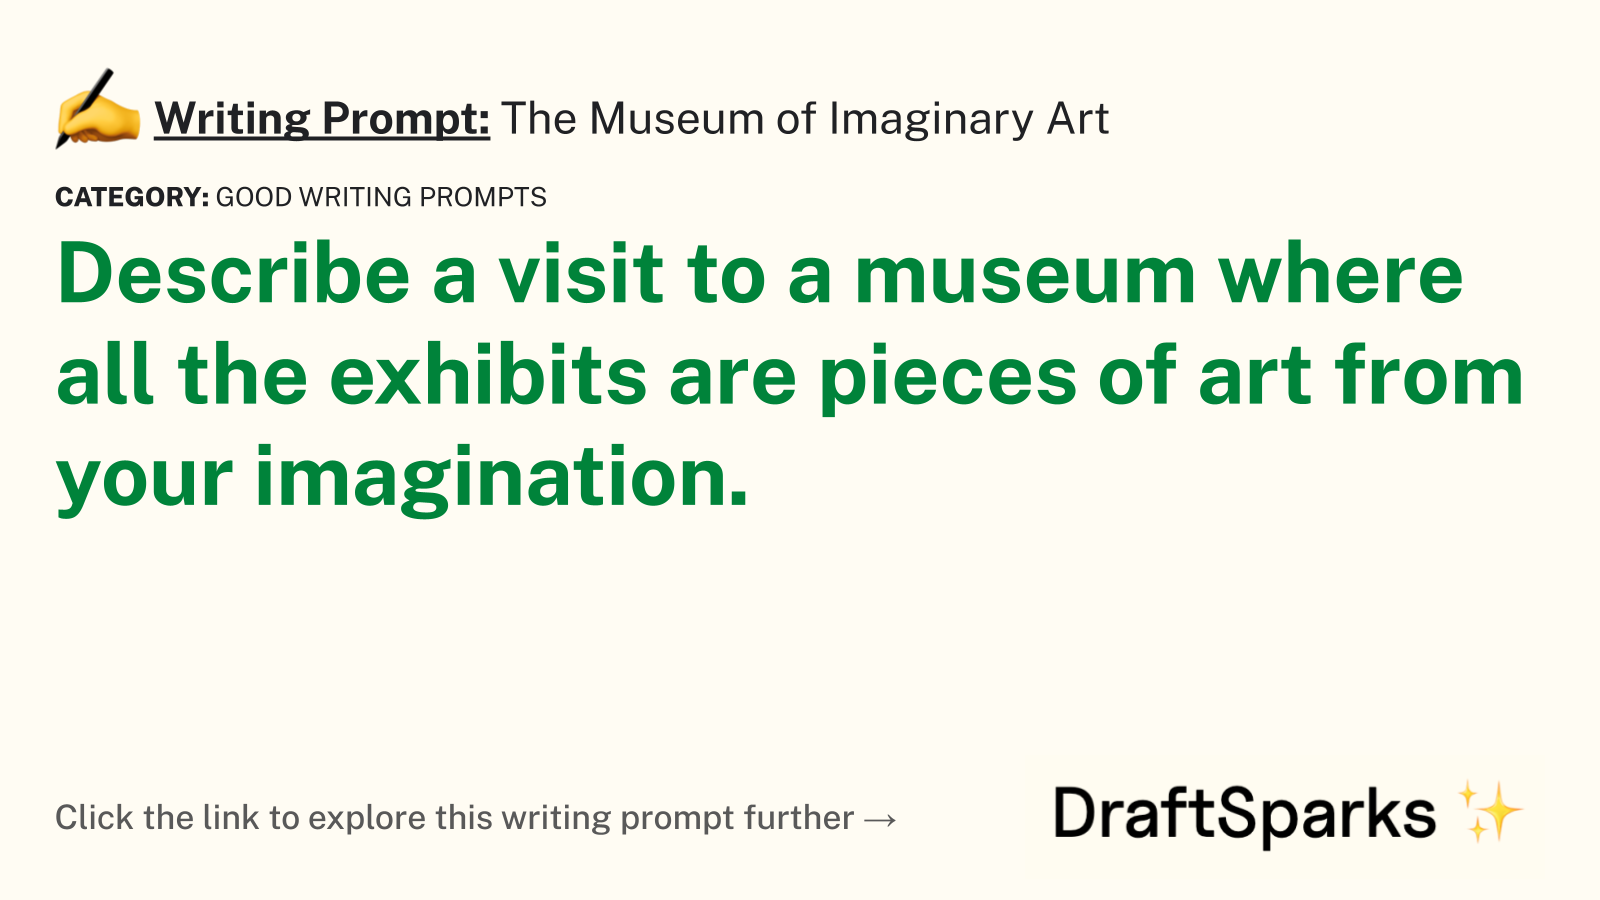 The Museum of Imaginary Art